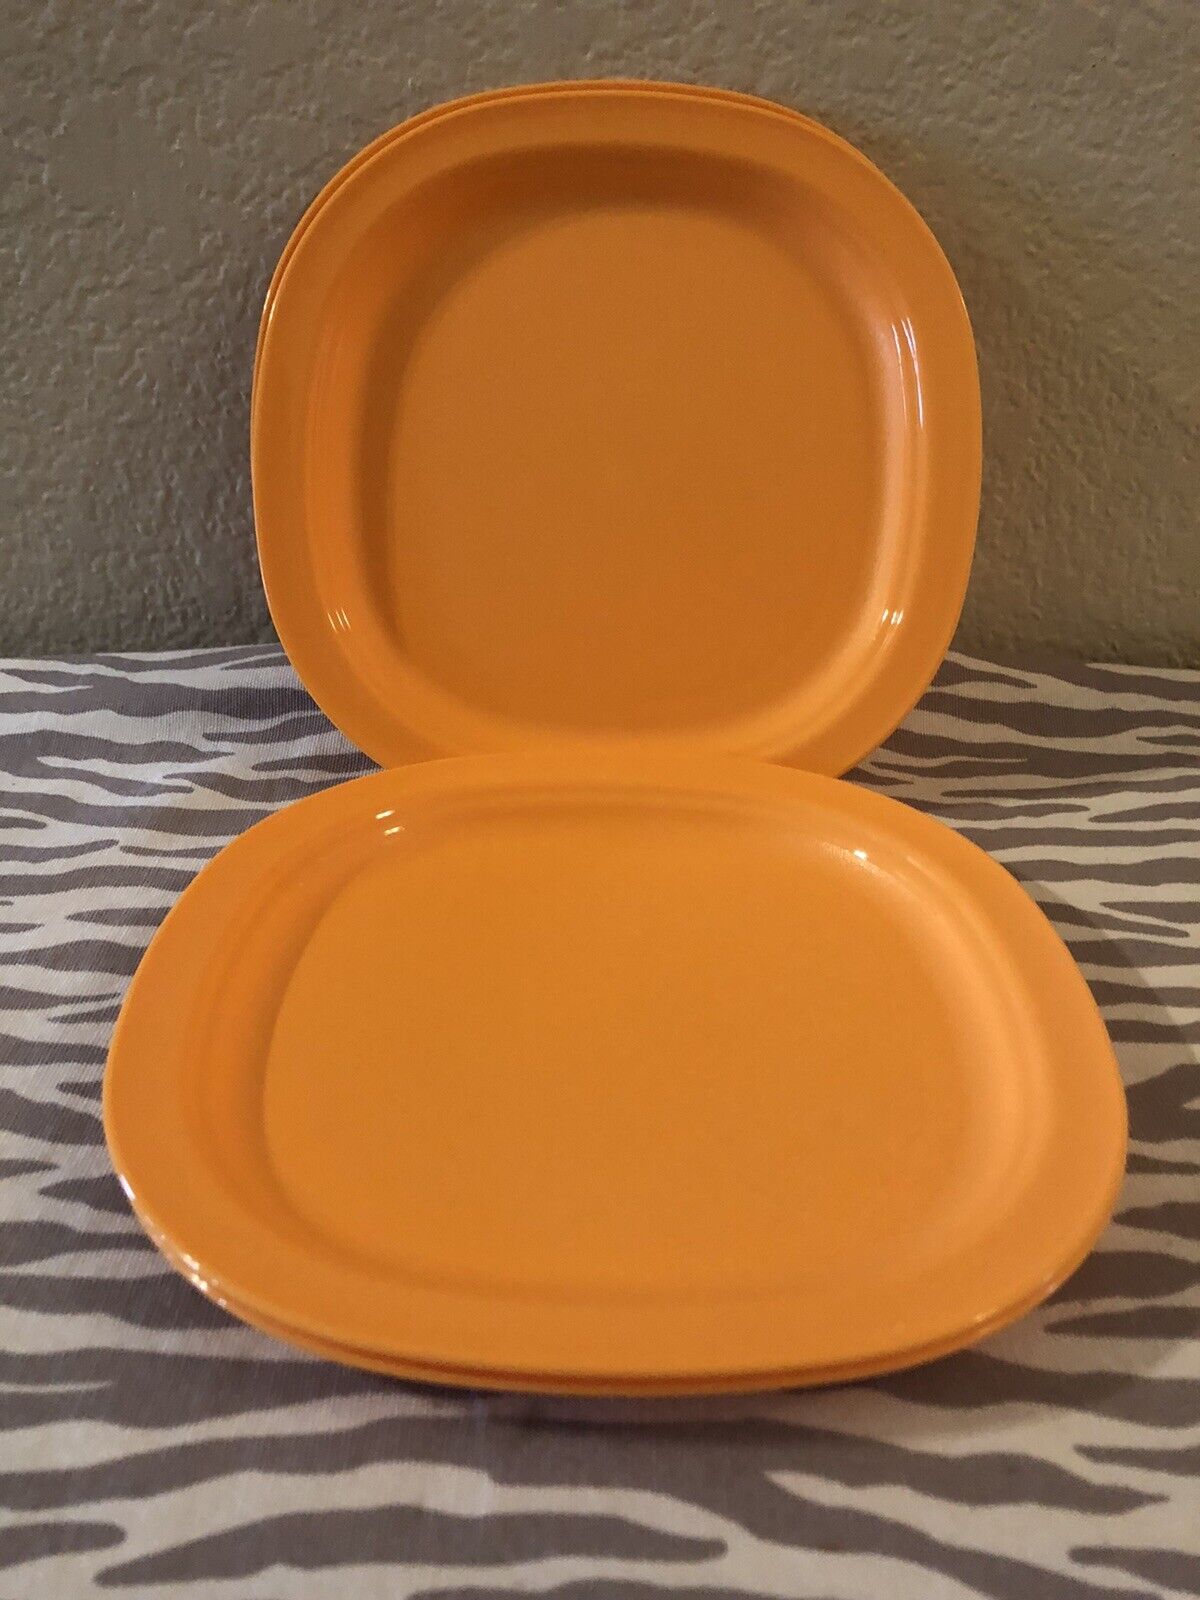 Tupperware Luncheon Plates Dessert Plates Set of 4 Orange 7 3/4” New Tupperware - фотография #5